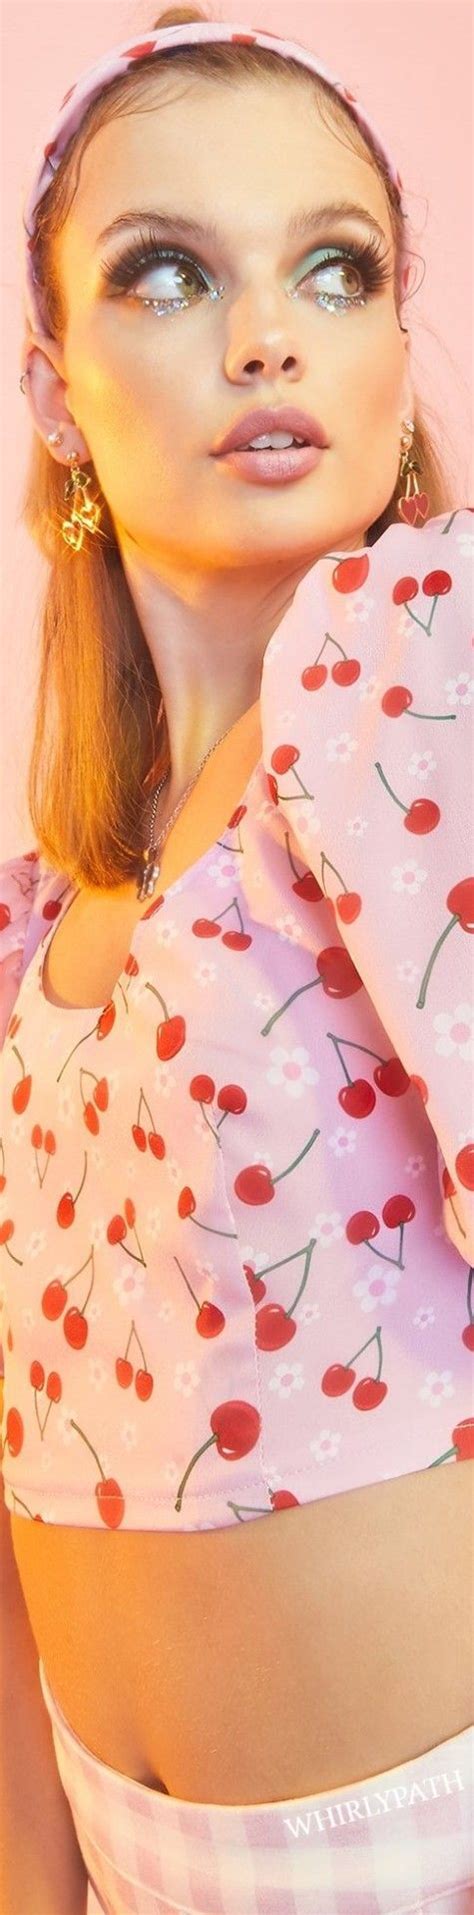 Cherry Print Fashion Source Dollskill Cherries Cherry Pink Fuit